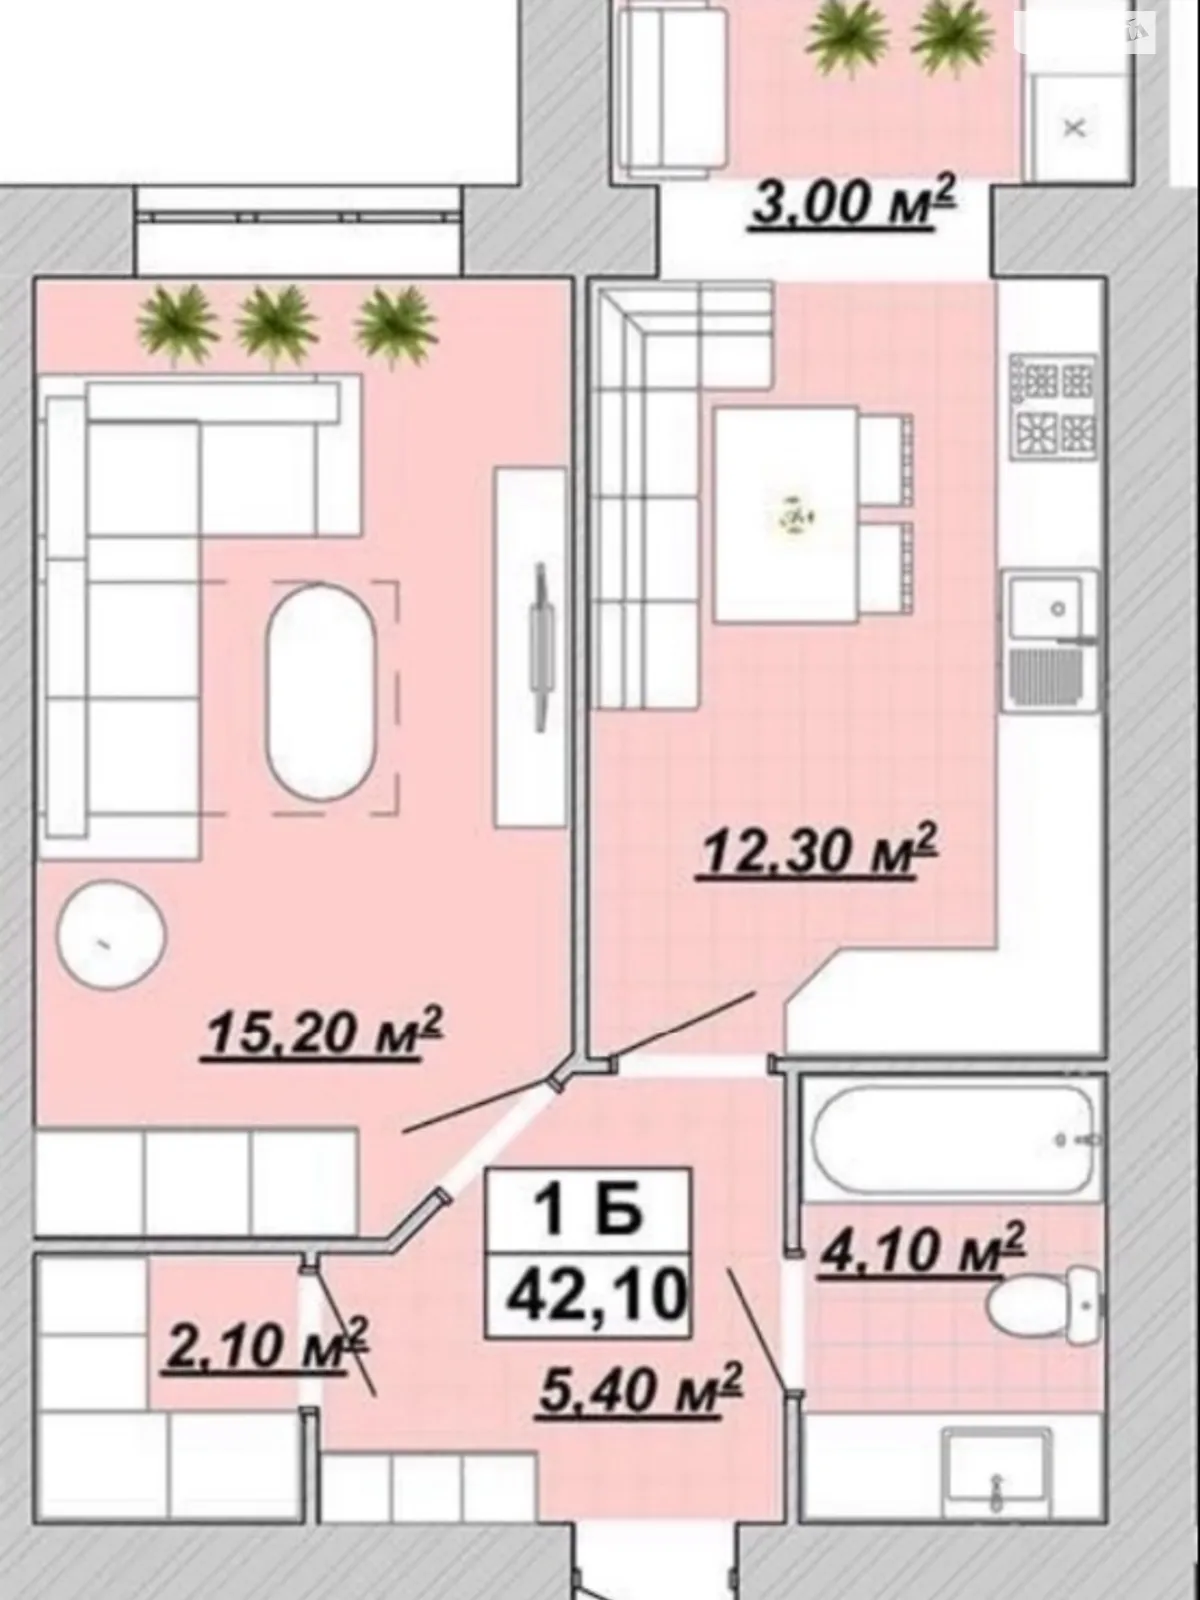 Продается 1-комнатная квартира 42.1 кв. м в Ивано-Франковске, ул. Княгинин, 44 - фото 1